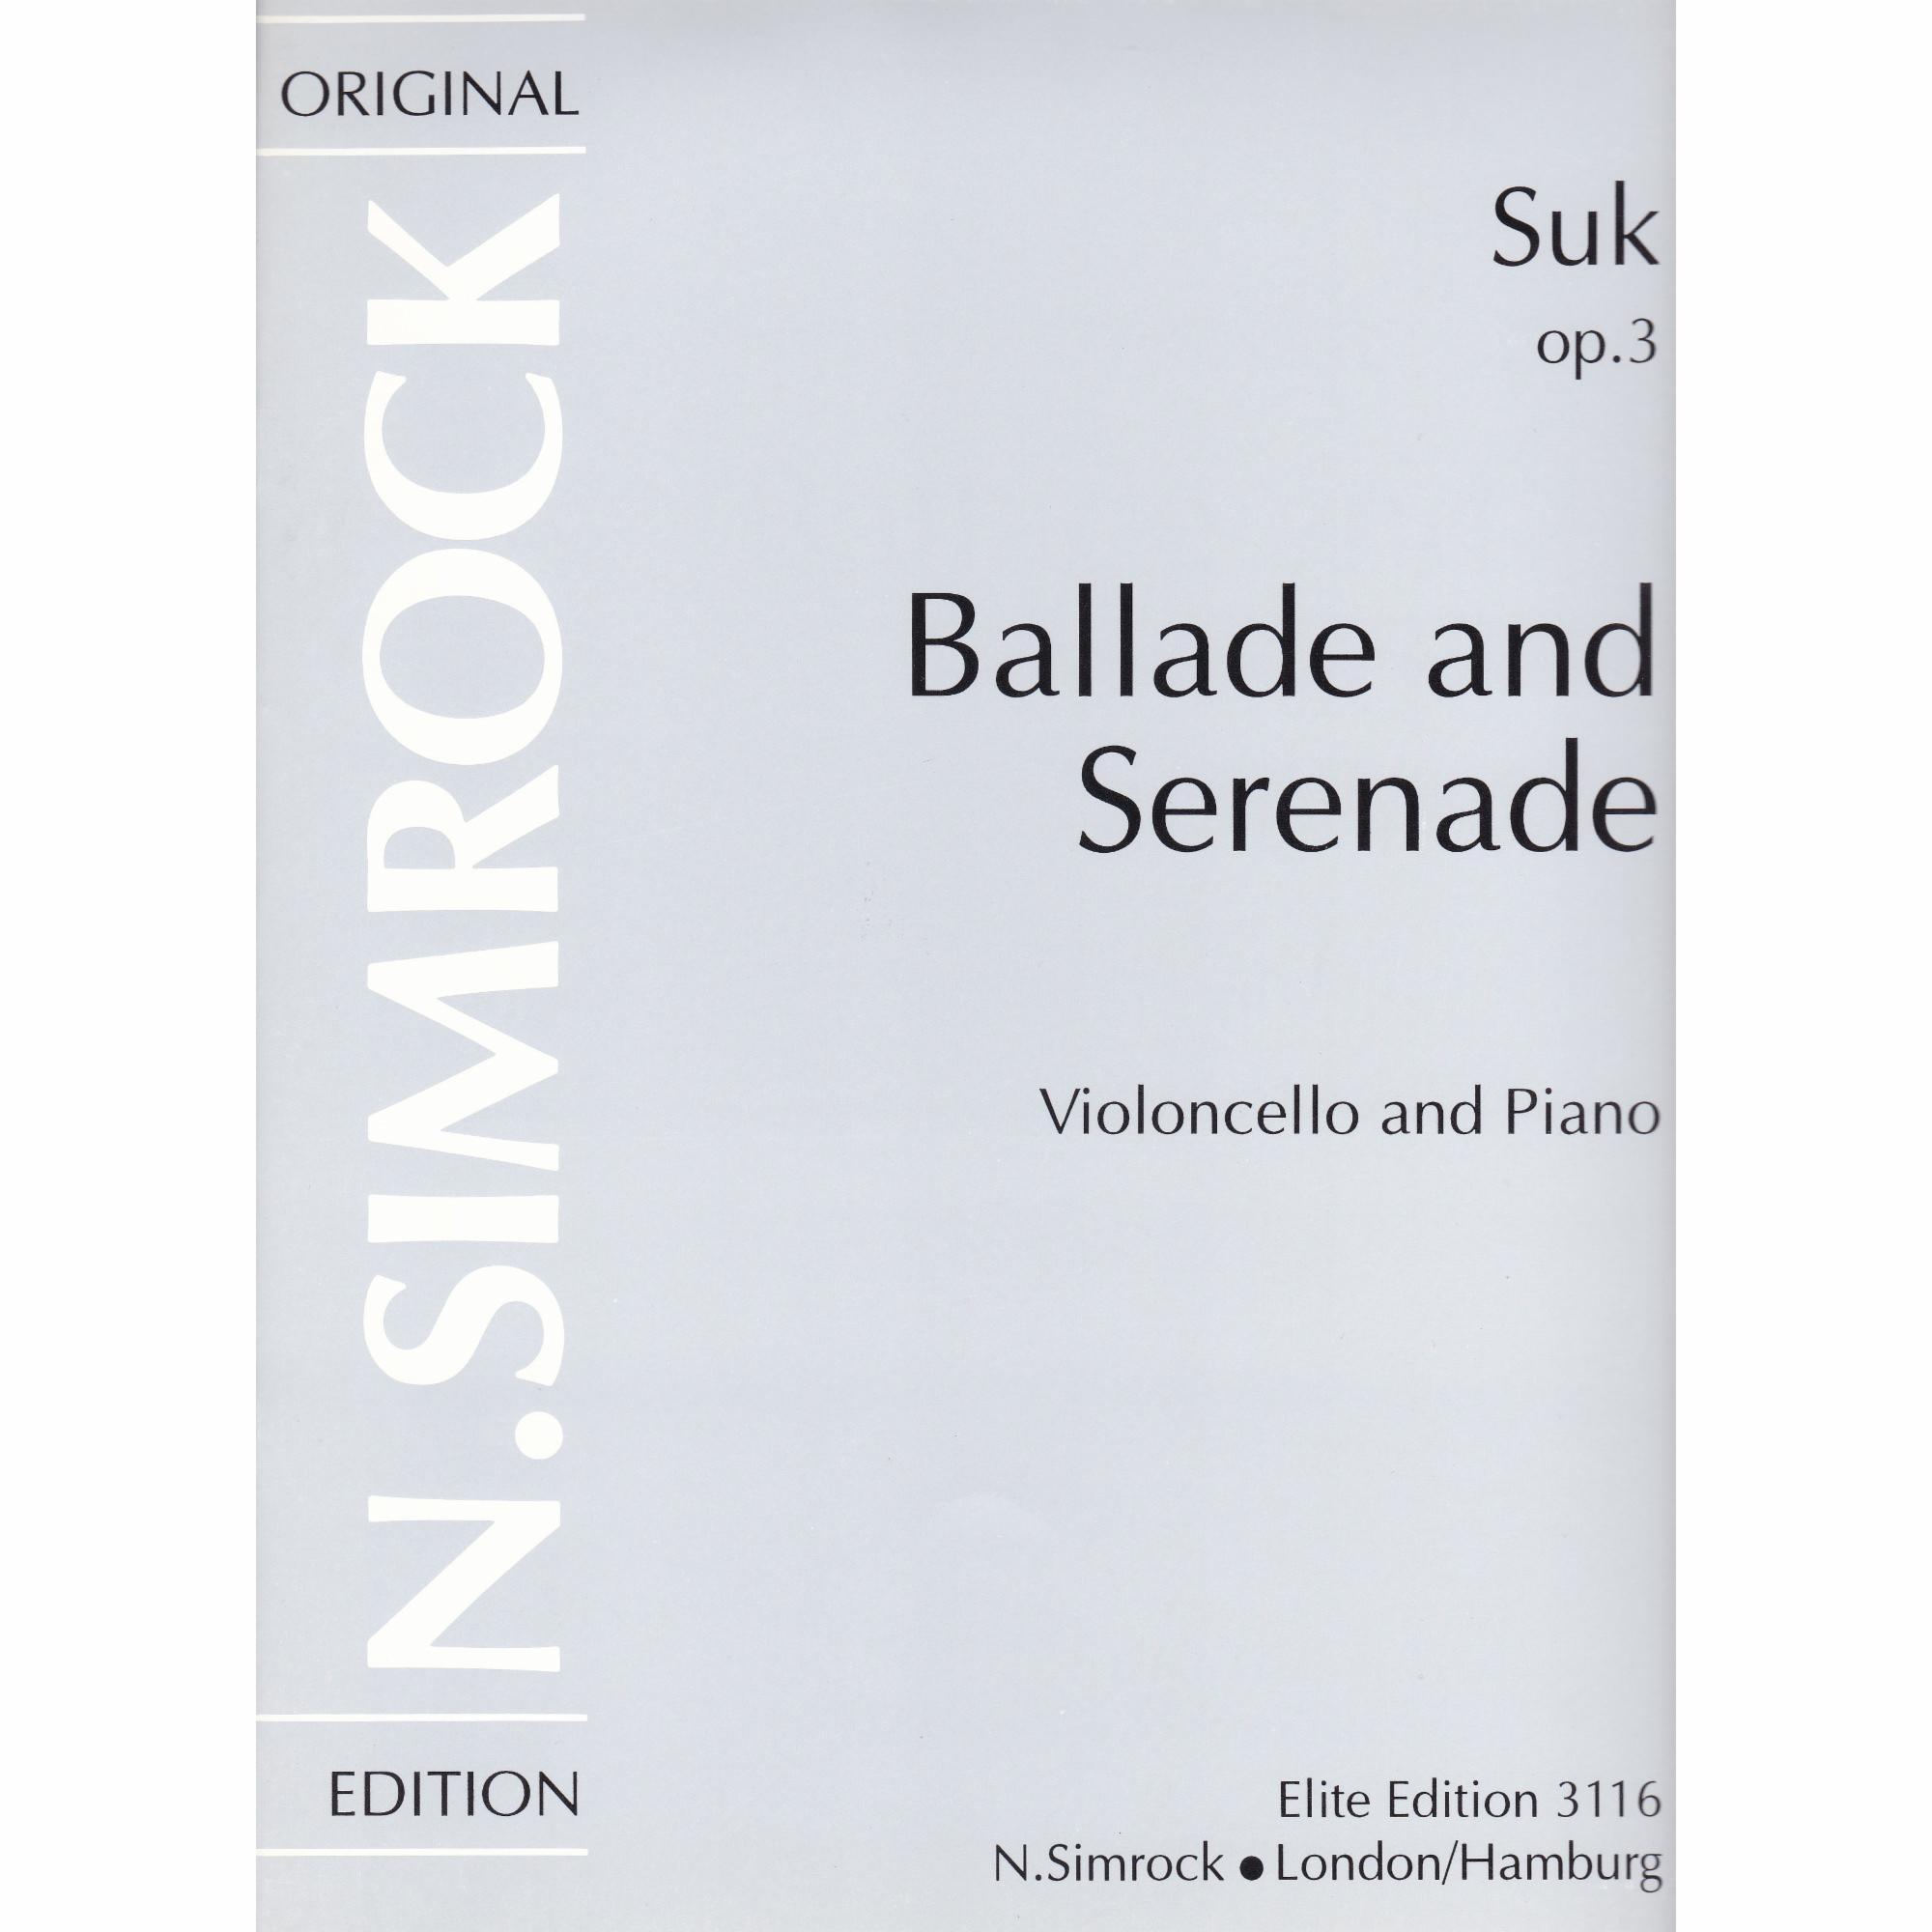 Ballade and Serenade for Cello and Piano, Op. 3